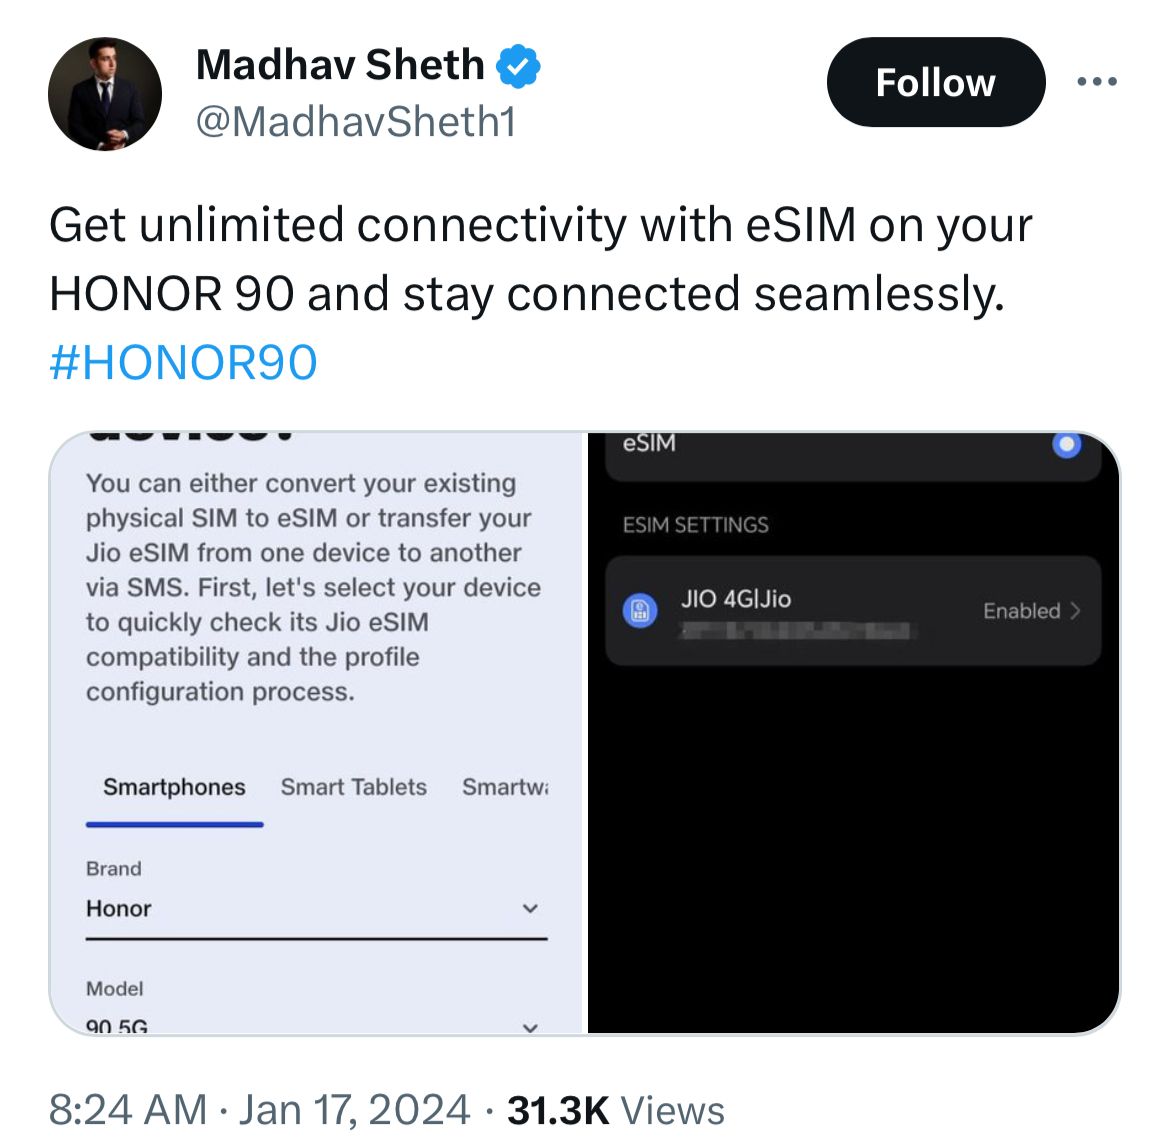 eSIM compatibility was announced by HTech CEO Madhav Sheth